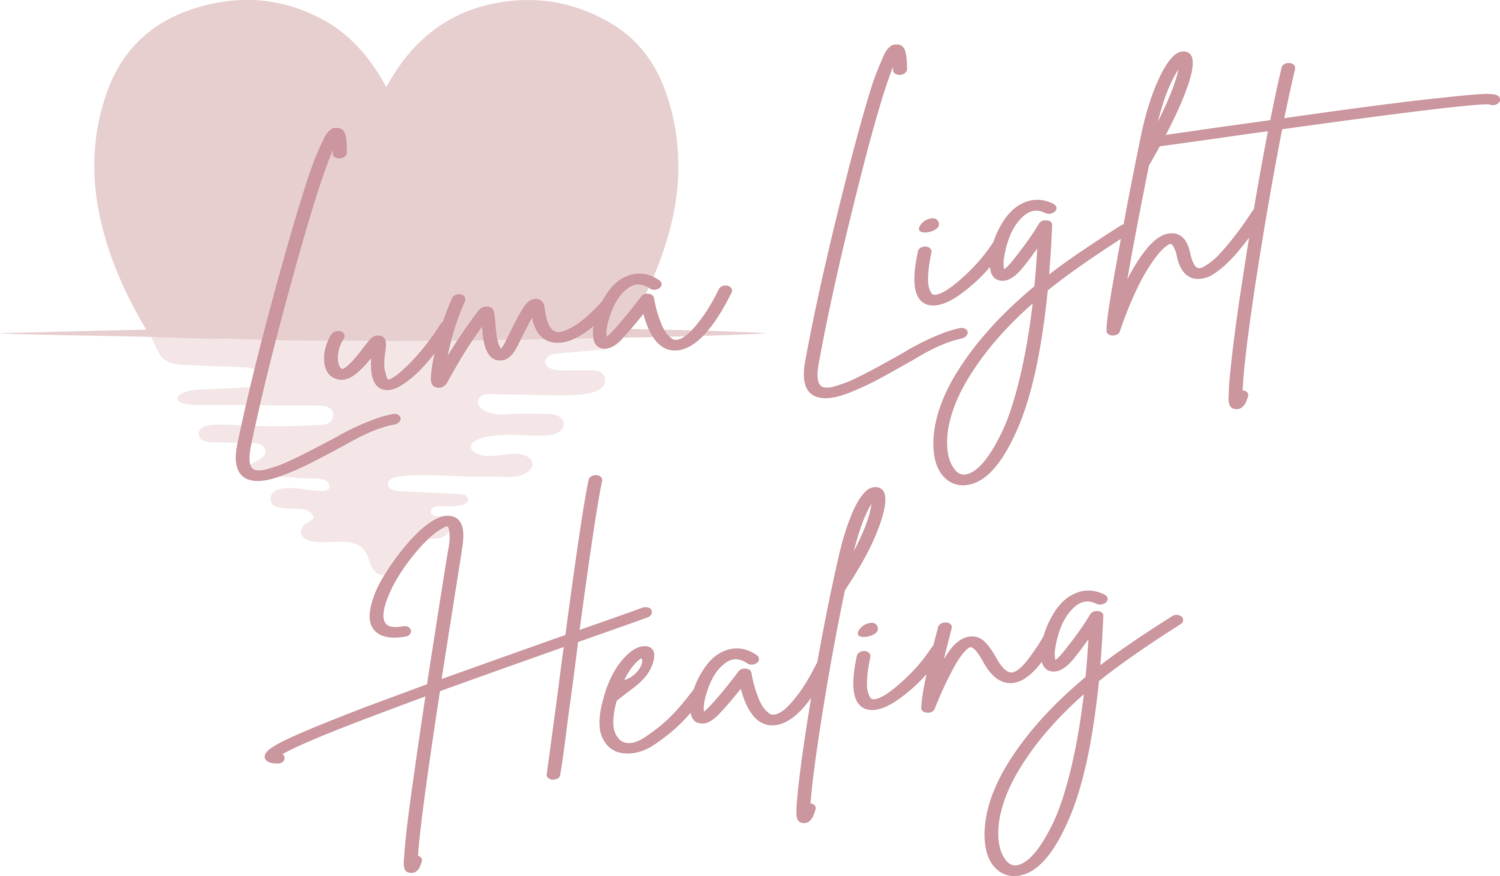 Luma Light Healing, LLC